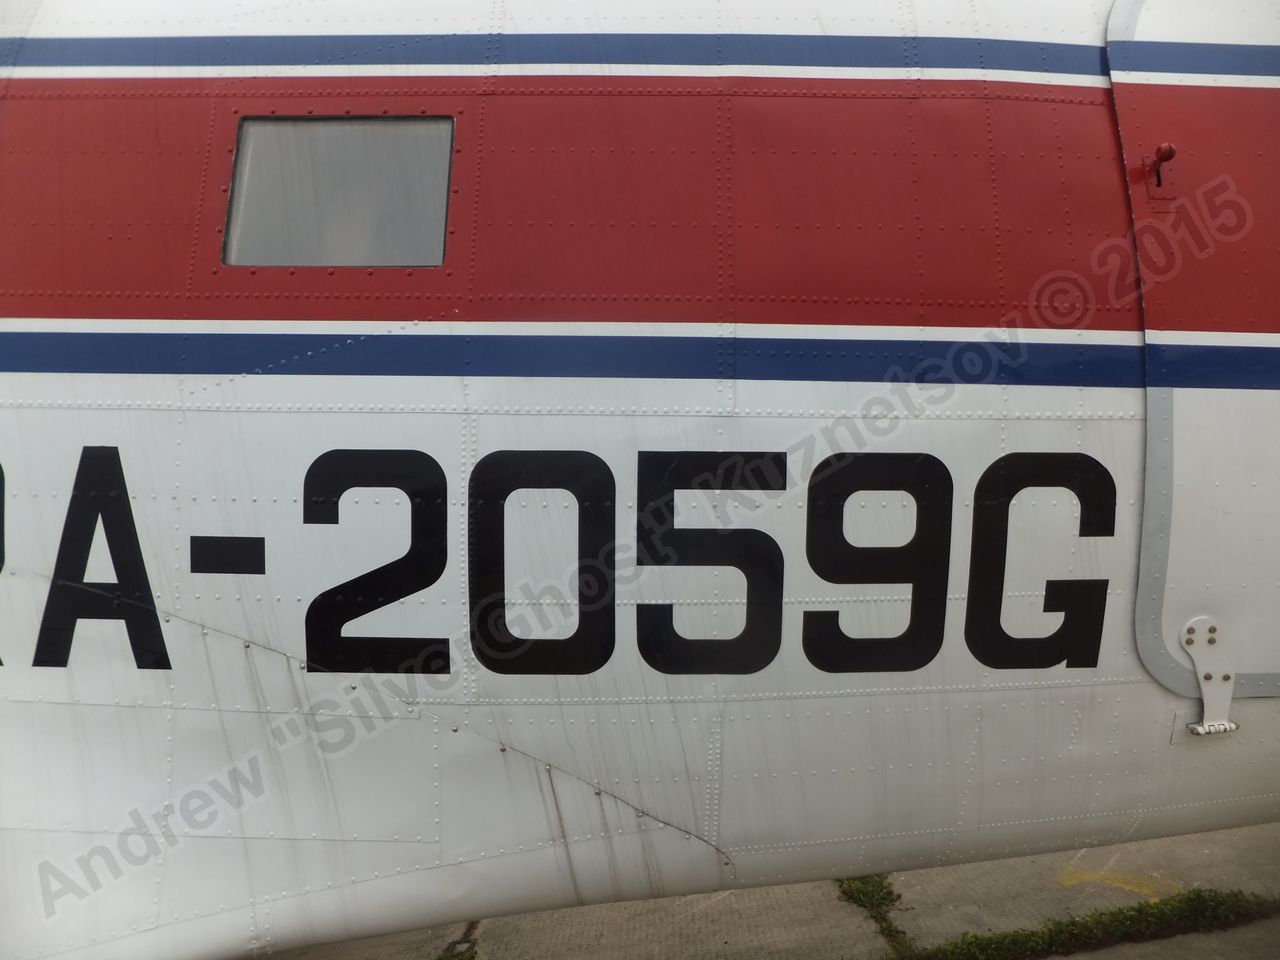 DC-3_Stupino_0047.jpg